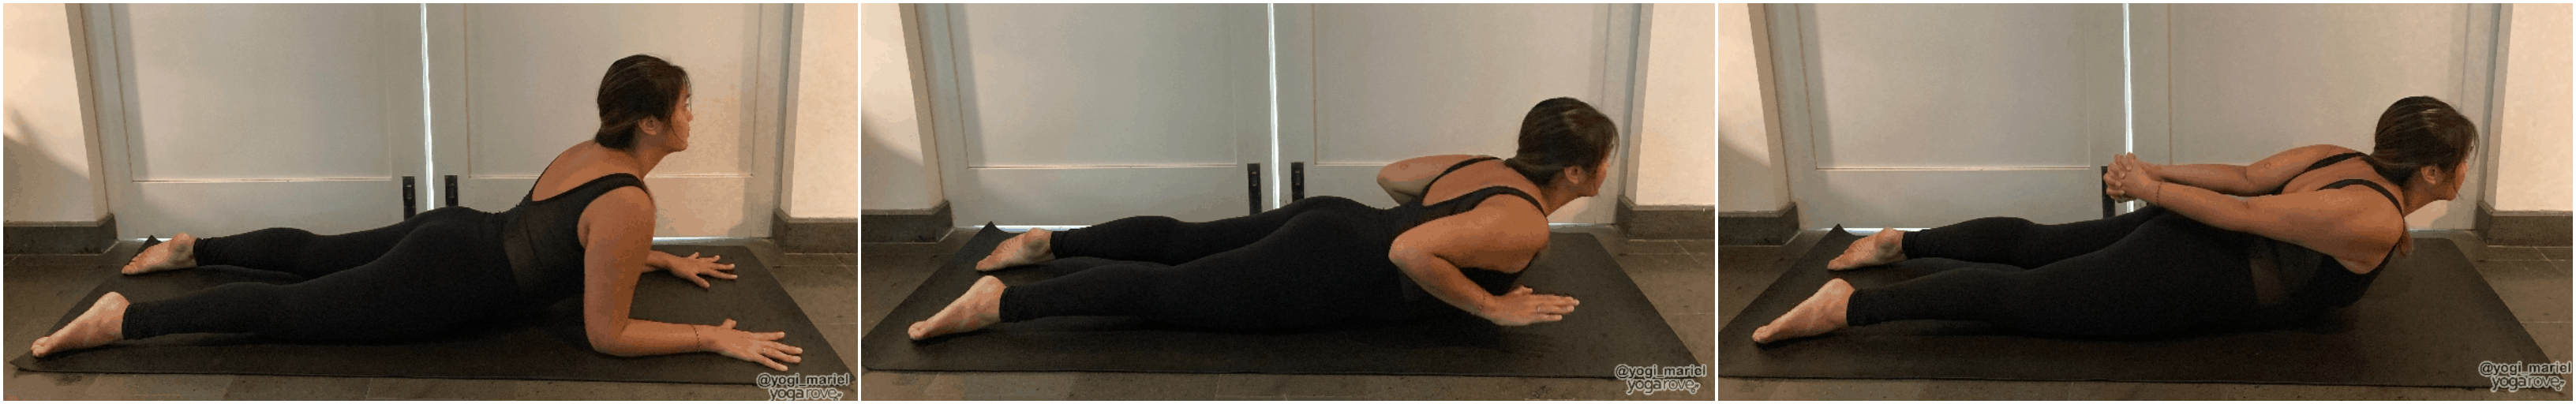 Modifying Pyramid Pose - Mental Muscle Wellness